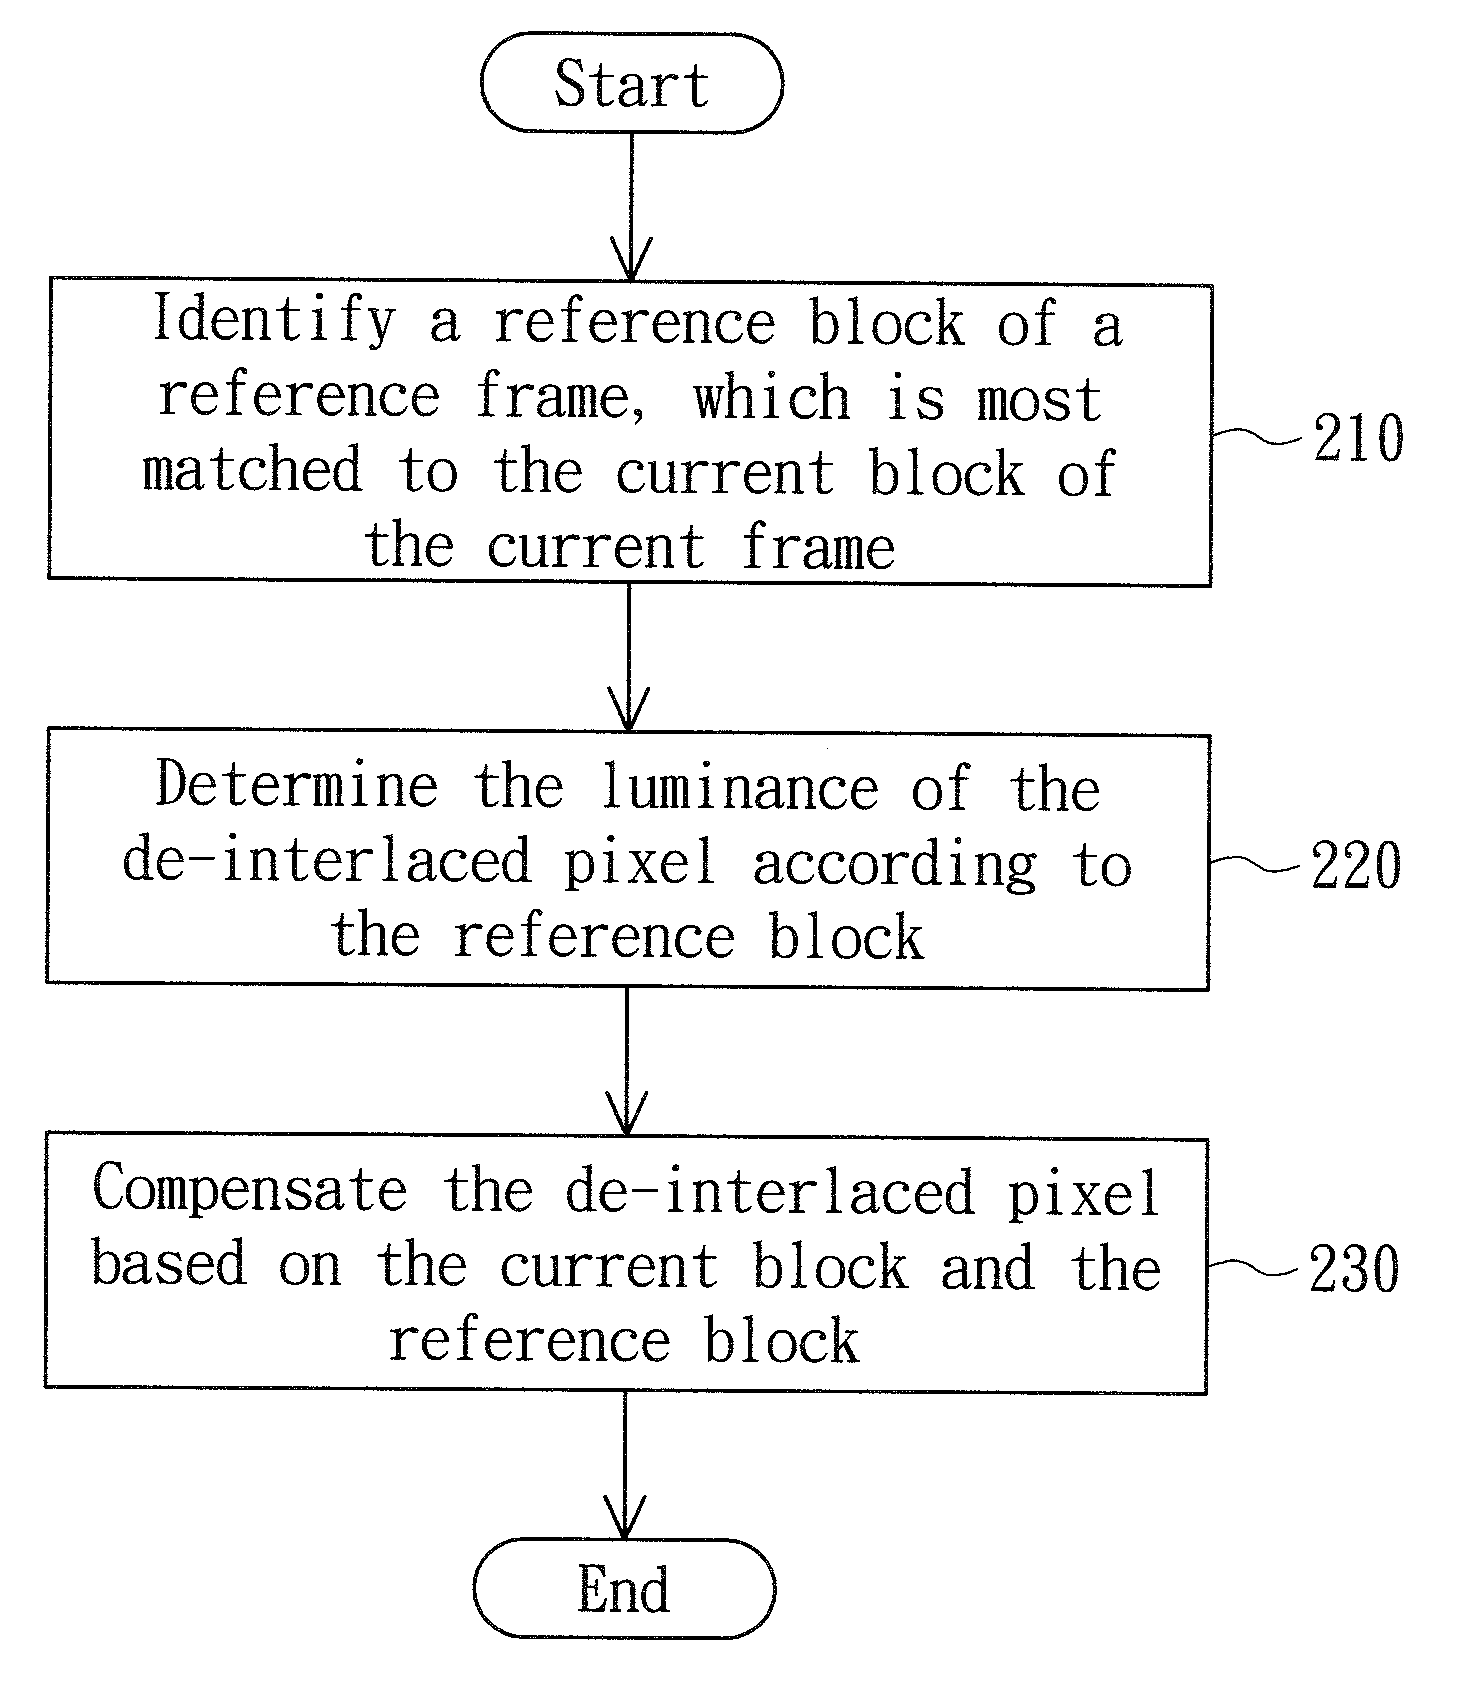 De-interlacing method and method of compensating a de-interlaced pixel